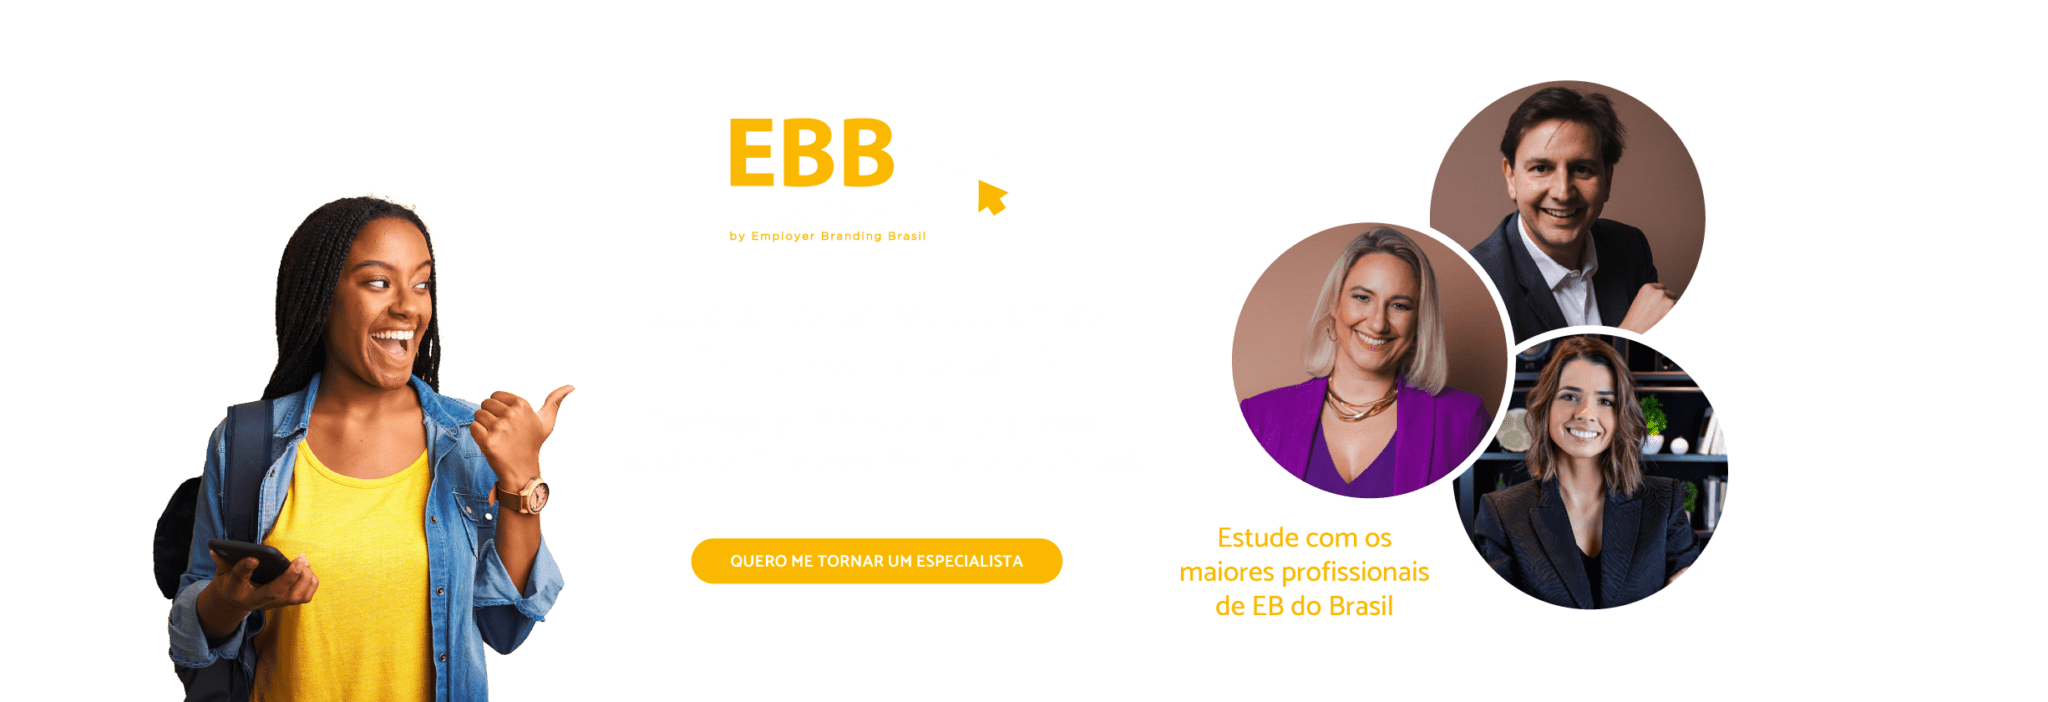 EBB Academy - Employer Branding Brasil